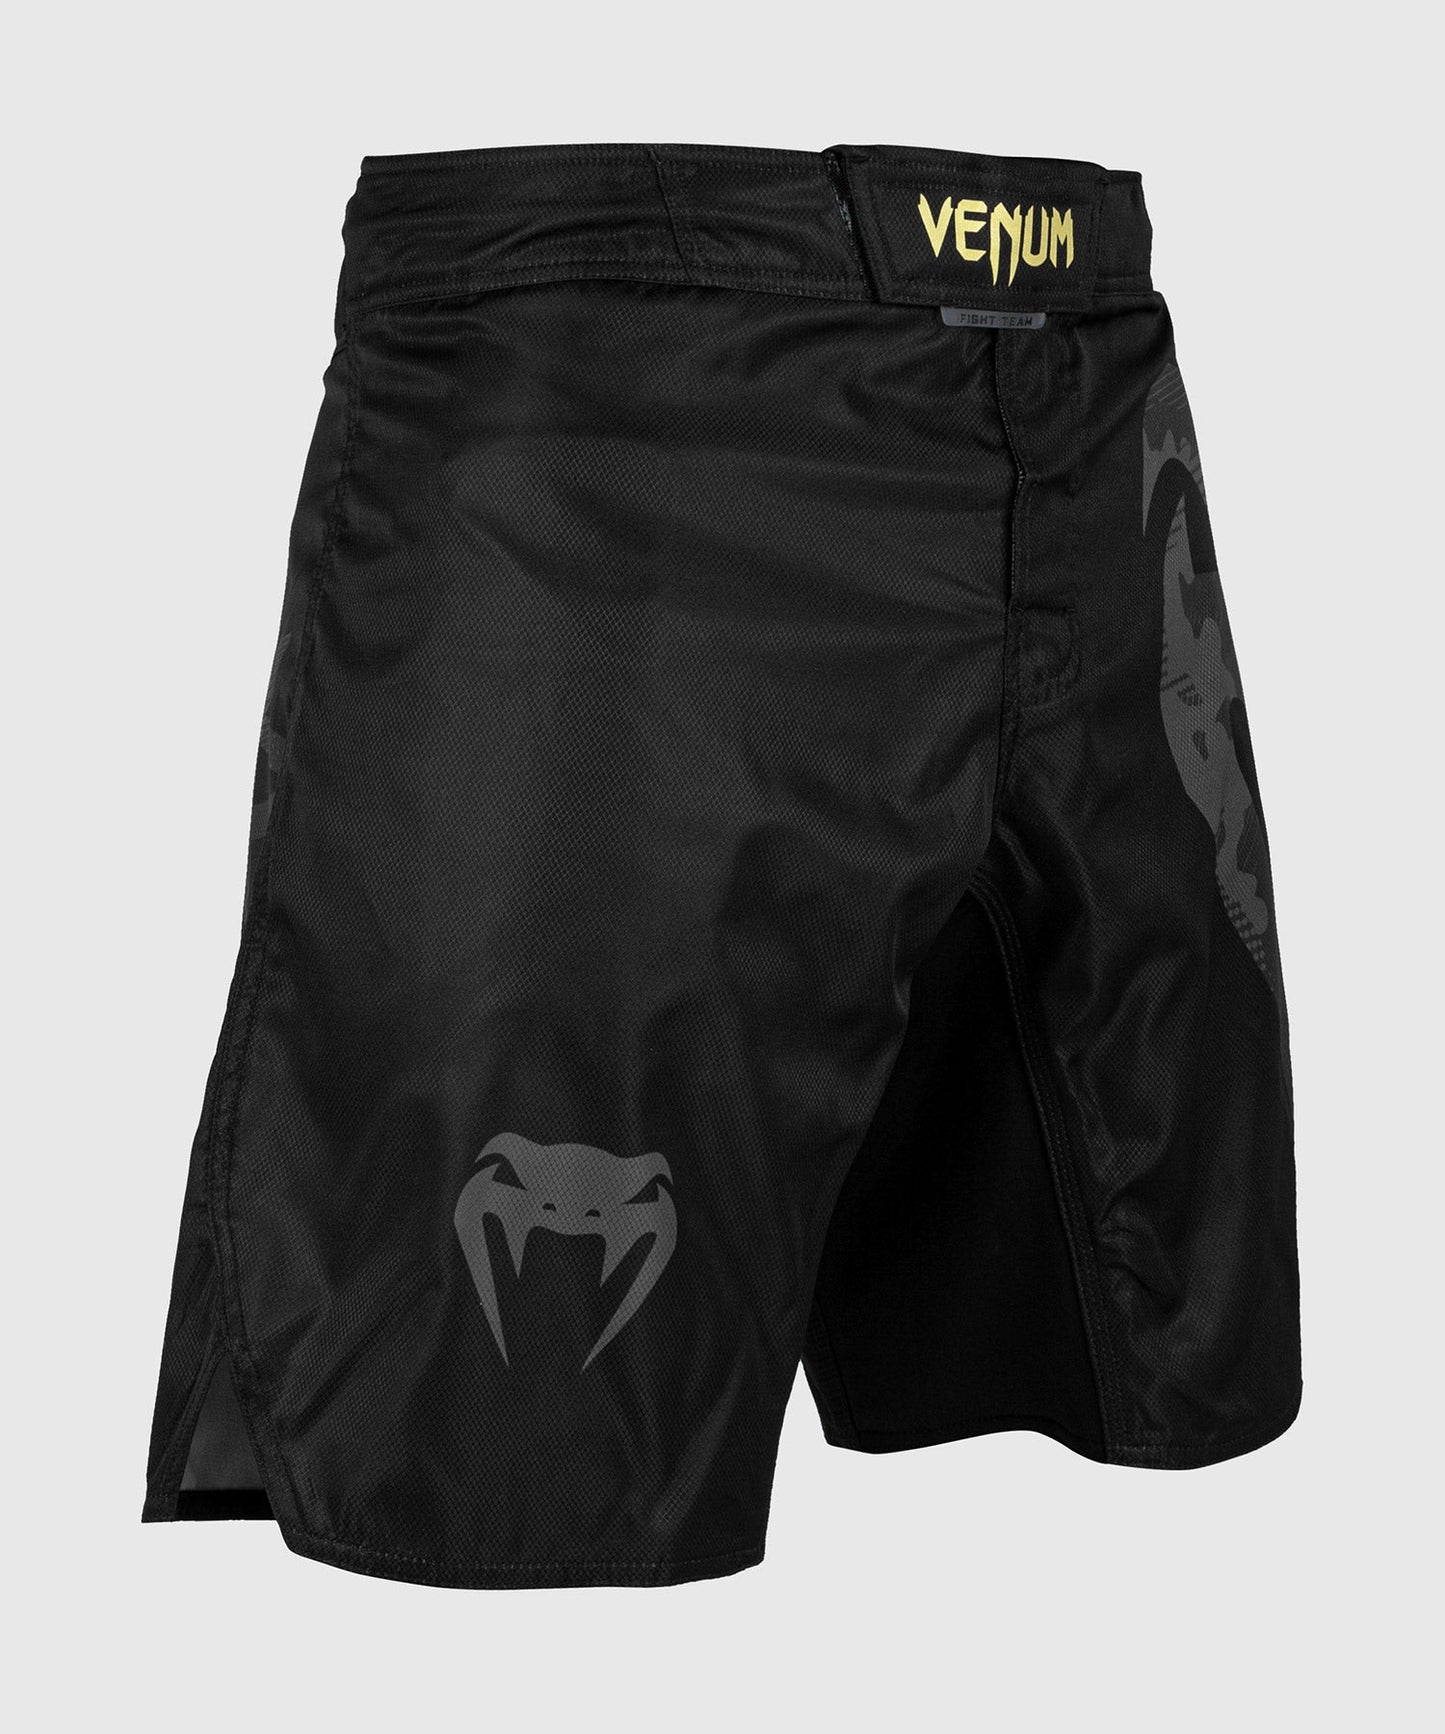 Venum Light 3.0 Fightshorts - Black/Gold